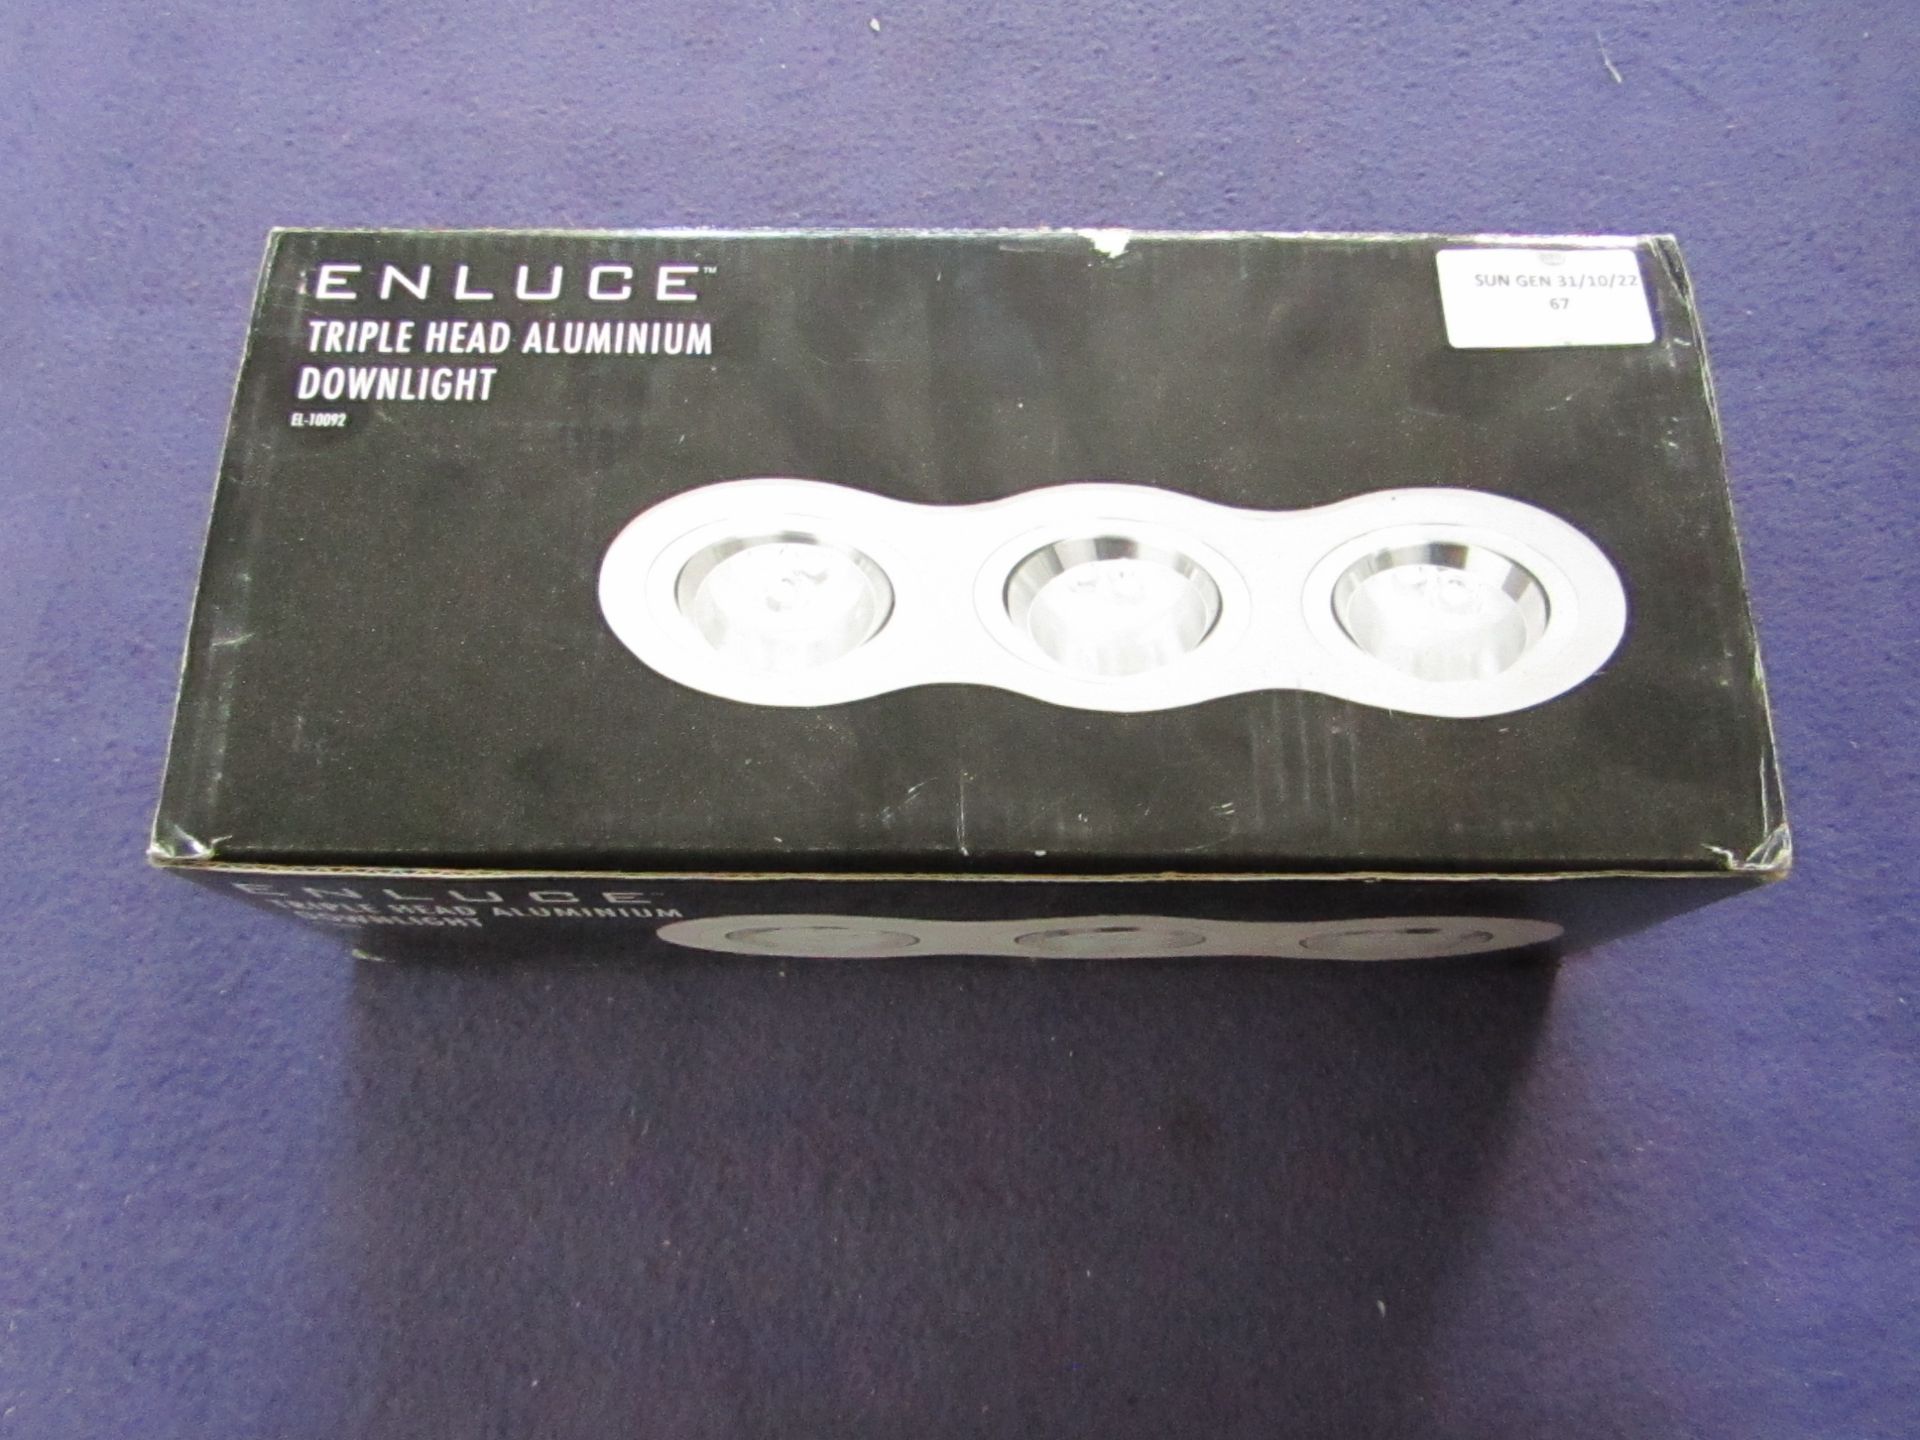 Enluce - Triple Head Aluminium Downlight - Unchecked & Boxed.